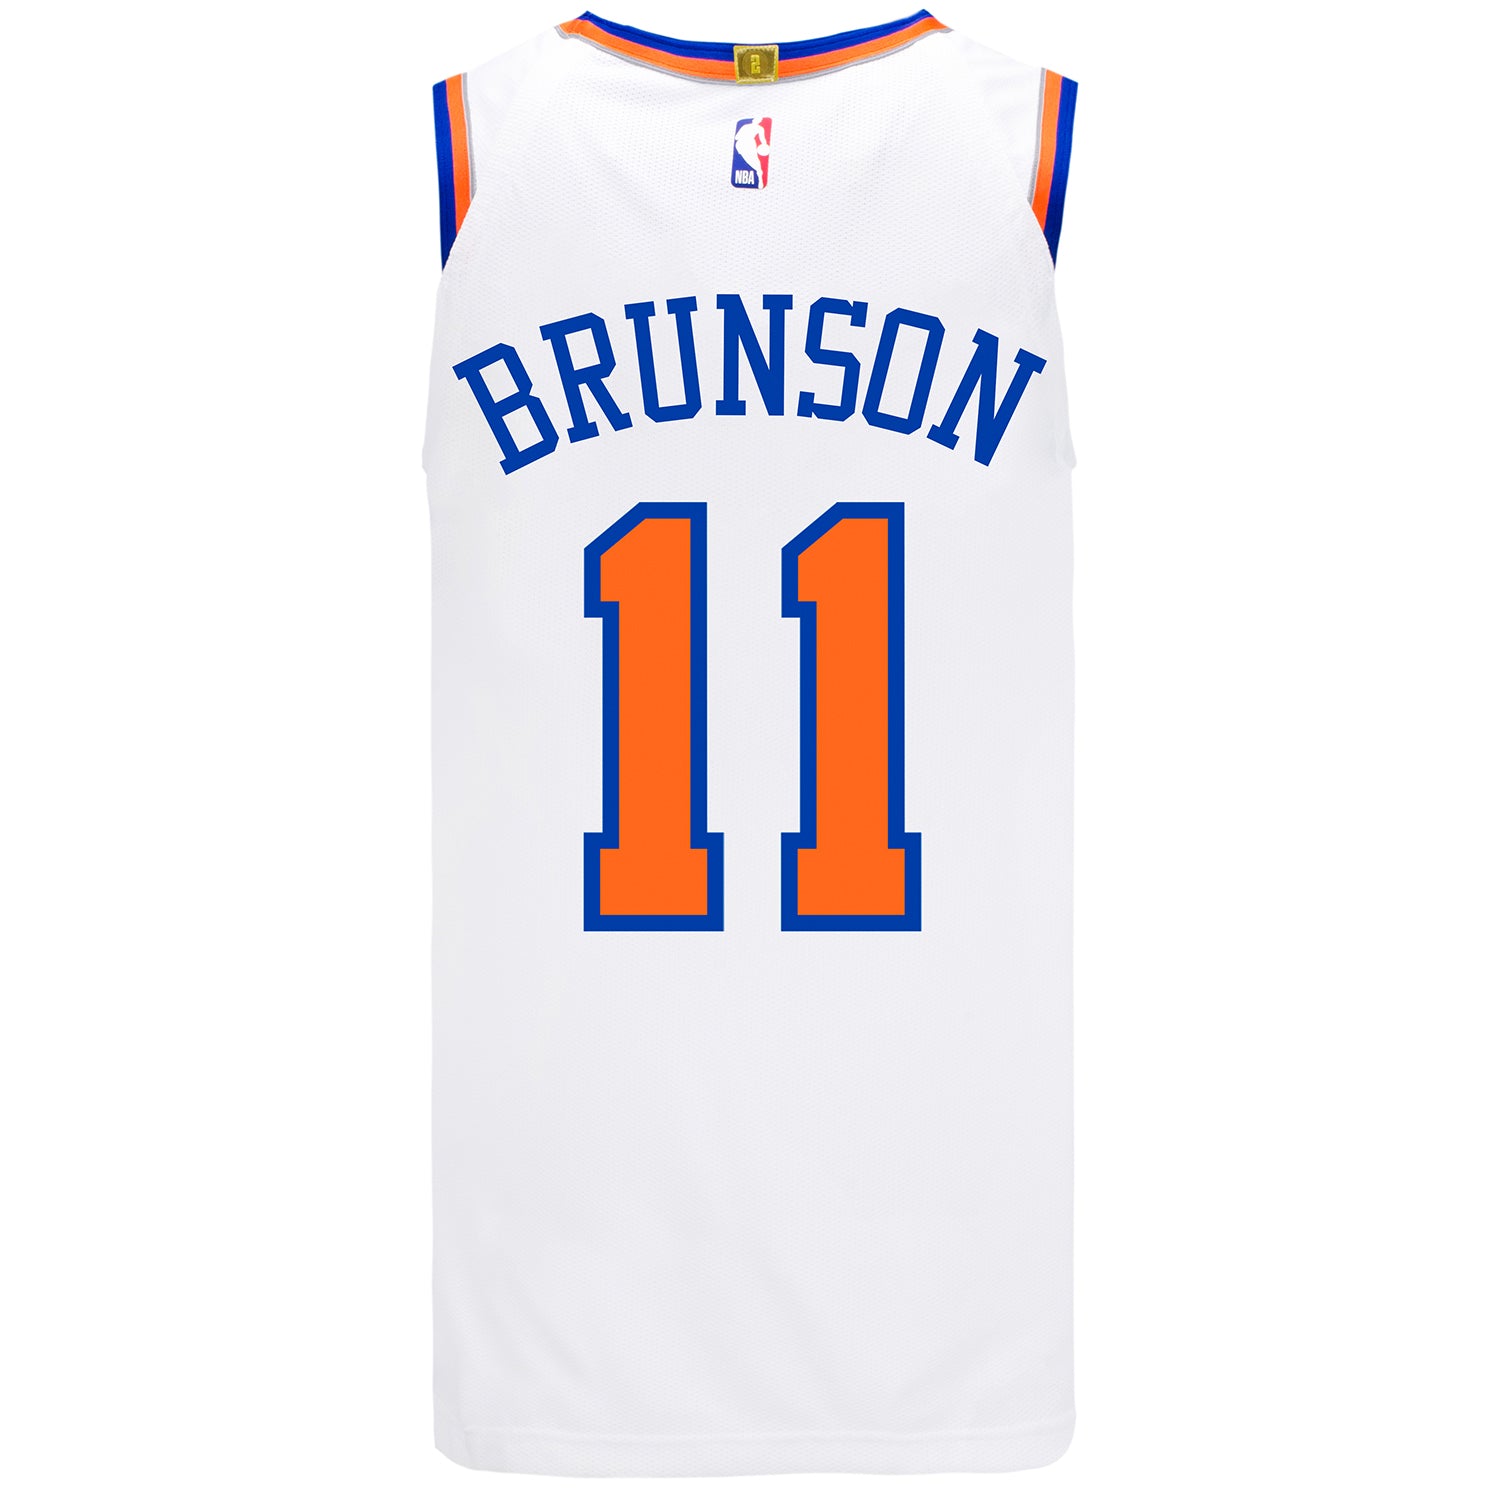 Autographed/Signed Jalen Brunson New York White Basketball Jersey PSA/DNA COA